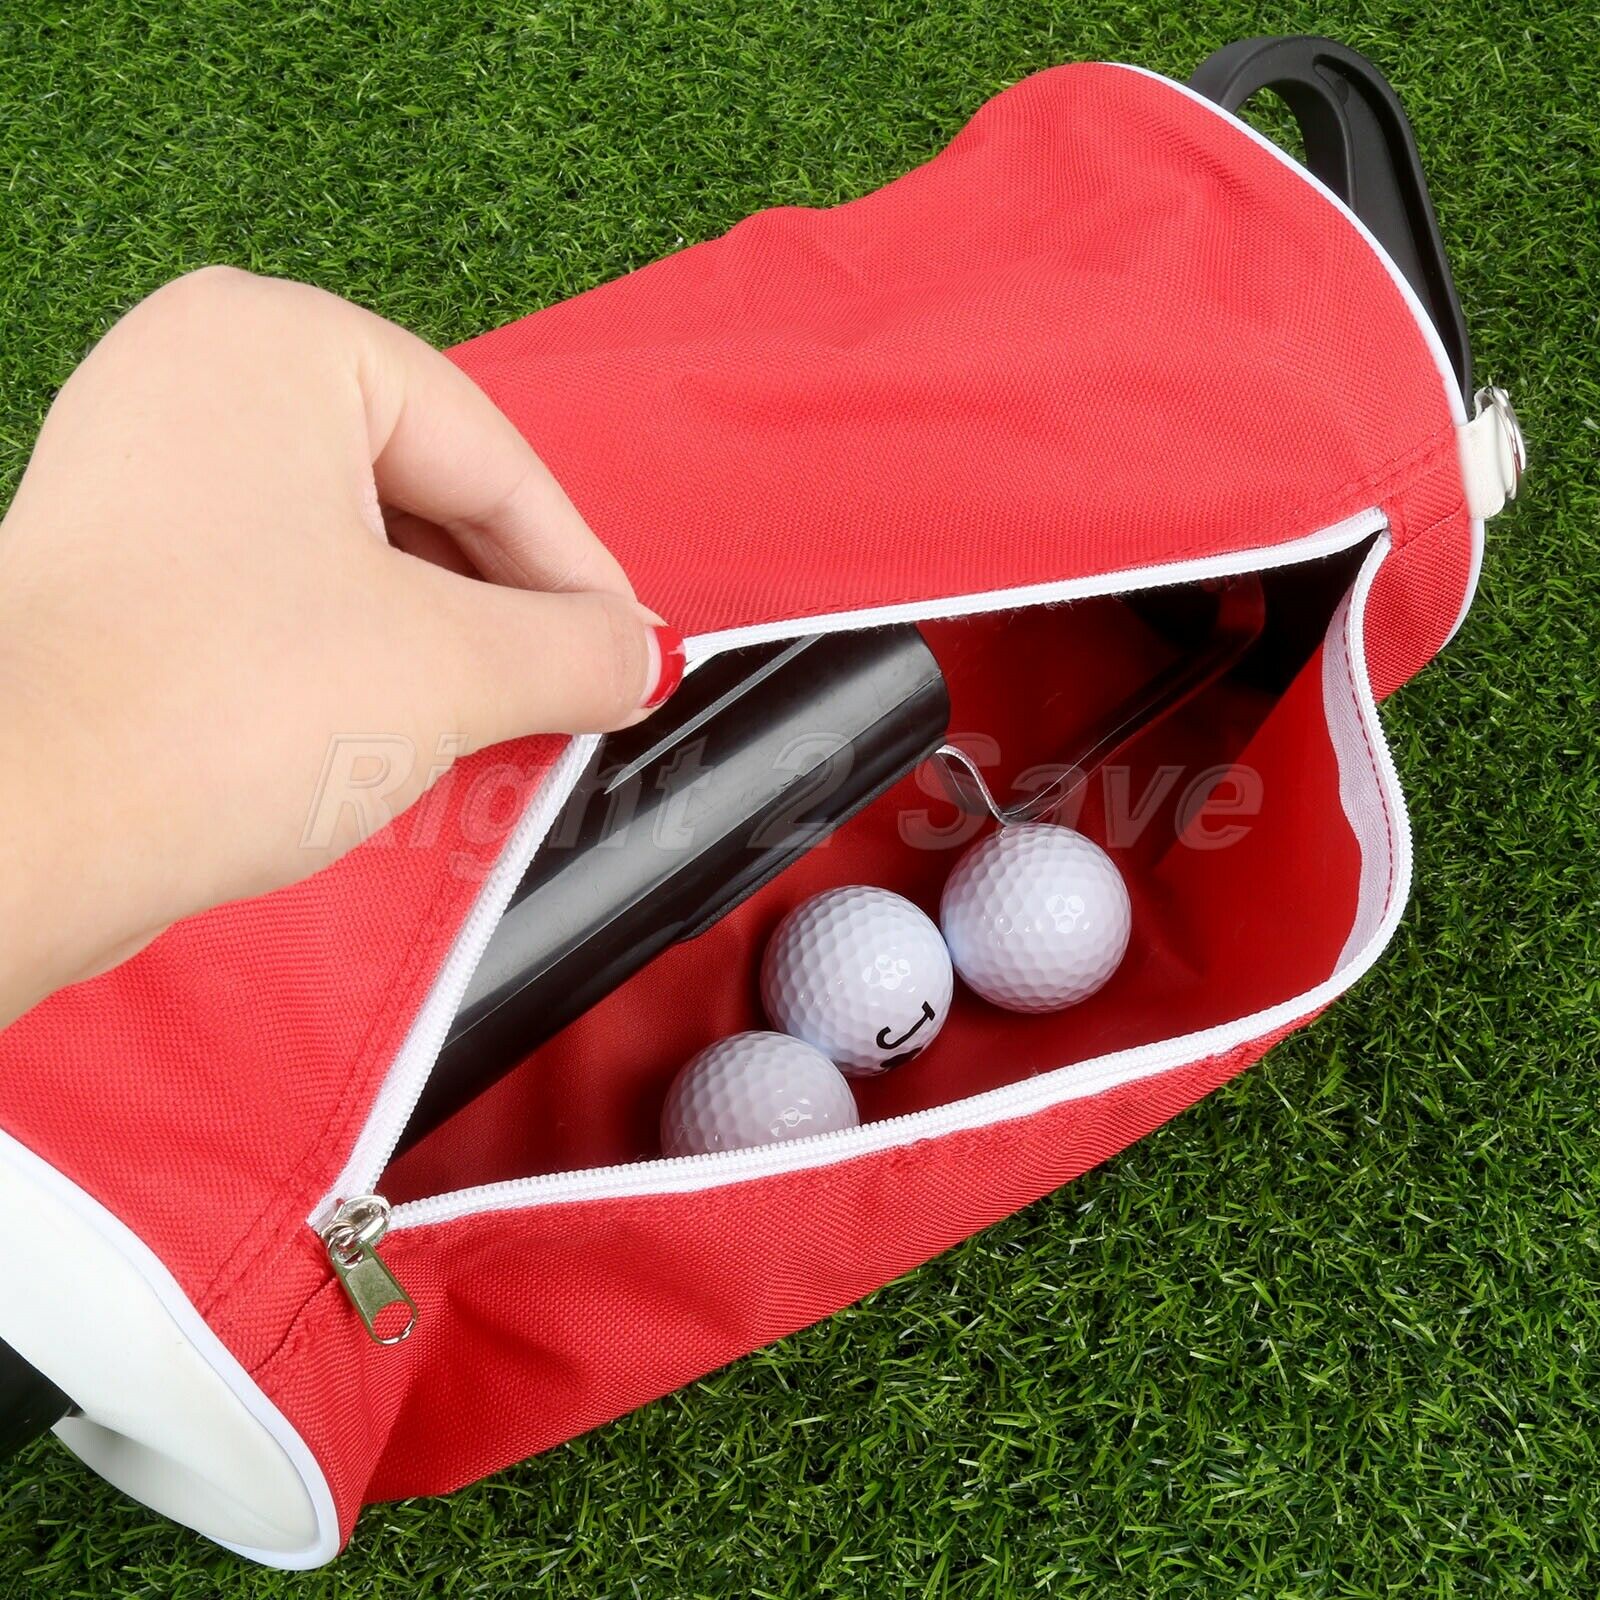 Golf Ball Picker Up Retriever Balls Holder Ball Nylon Bag Golf Club Accessory